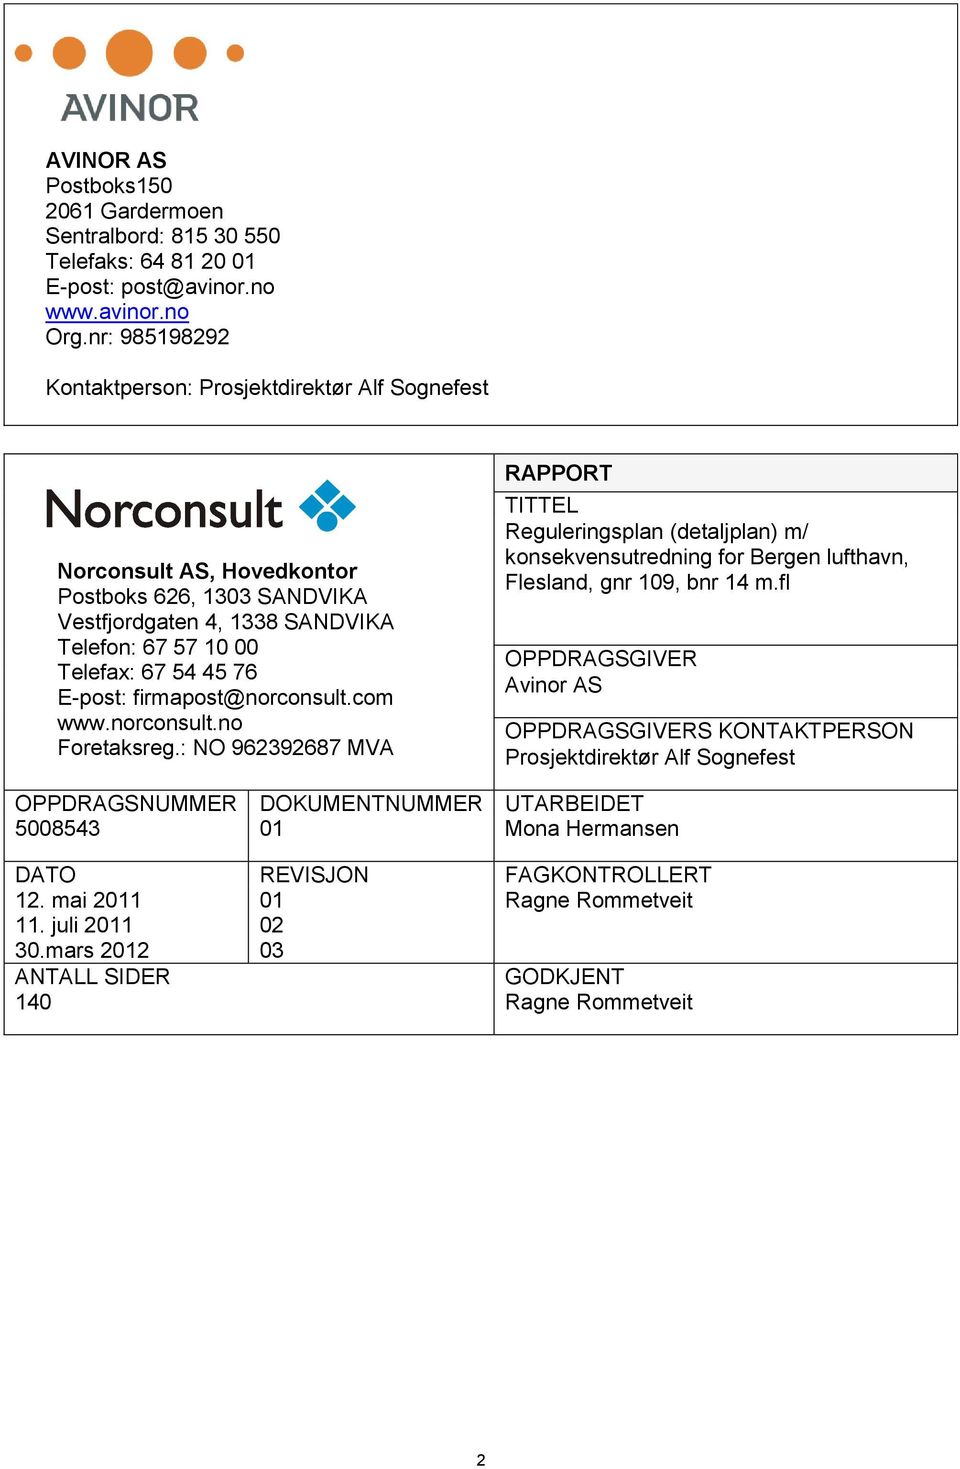 firmapost@norconsult.com www.norconsult.no Foretaksreg.: NO 962392687 MVA RAPPORT TITTEL Reguleringsplan (detaljplan) m/ konsekvensutredning for Bergen lufthavn, Flesland, gnr 109, bnr 14 m.